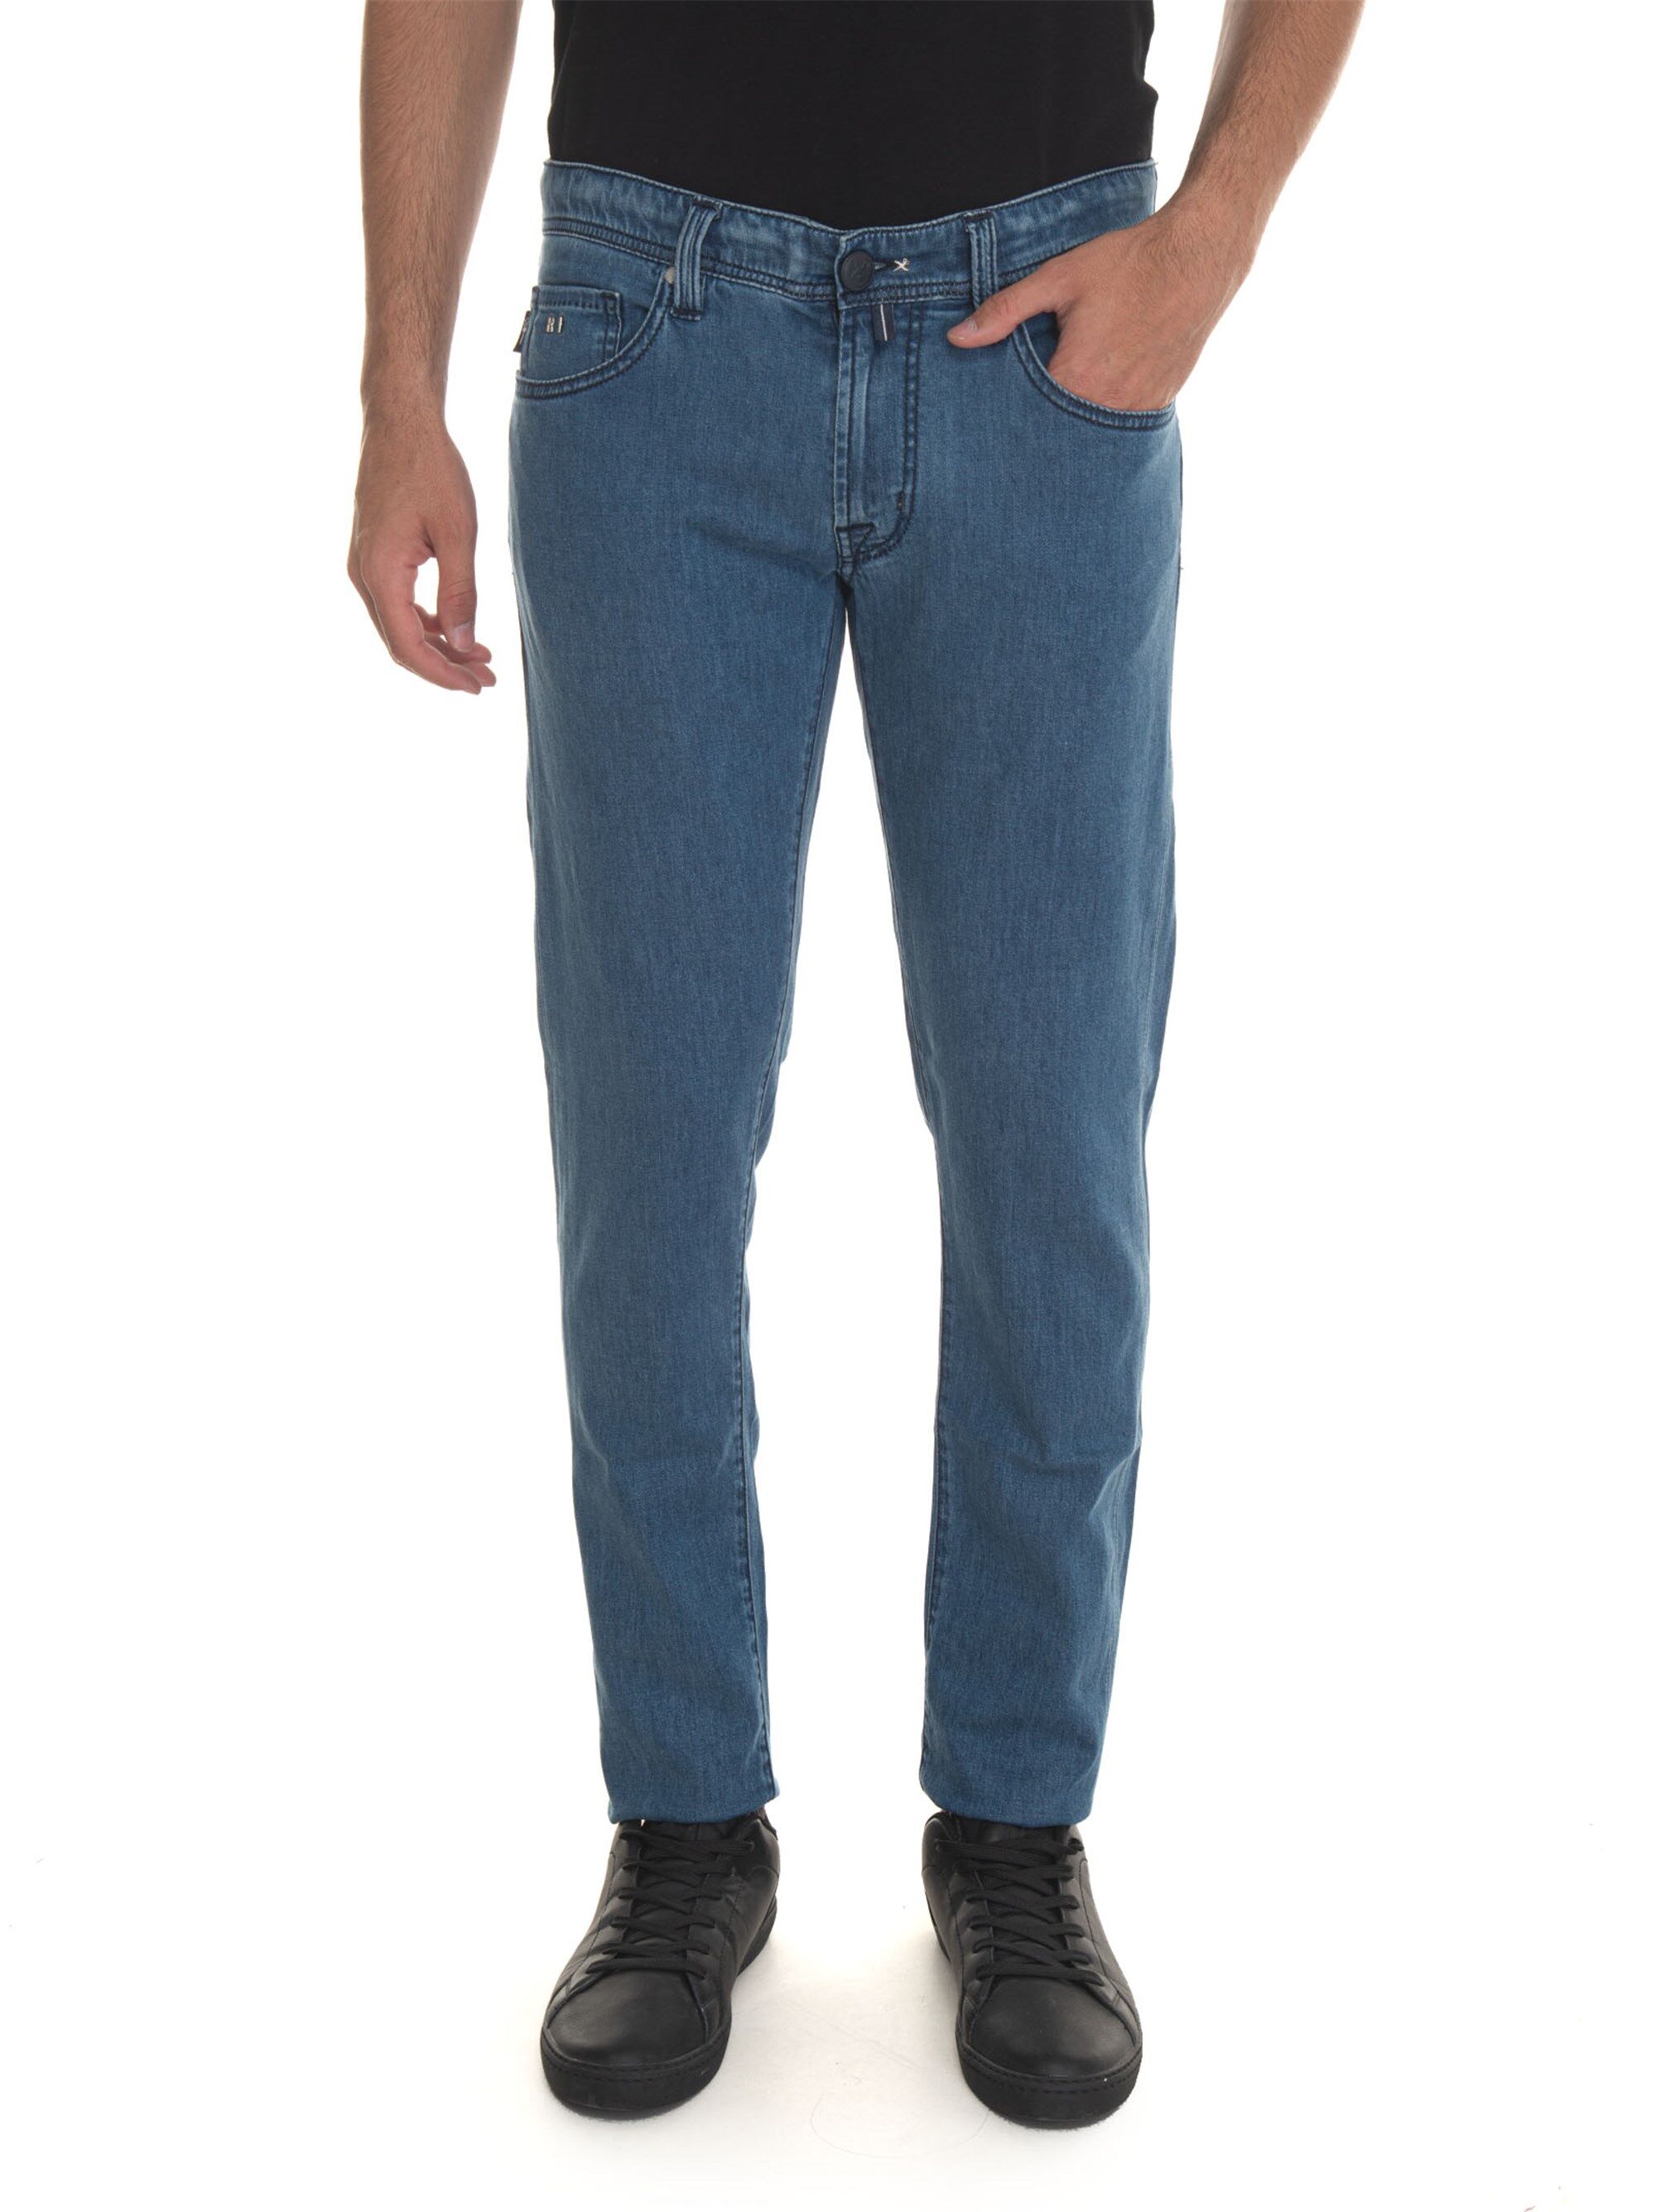 Tramarossa Jeans 5 tasche LEONARDO Denim medio Uomo 32